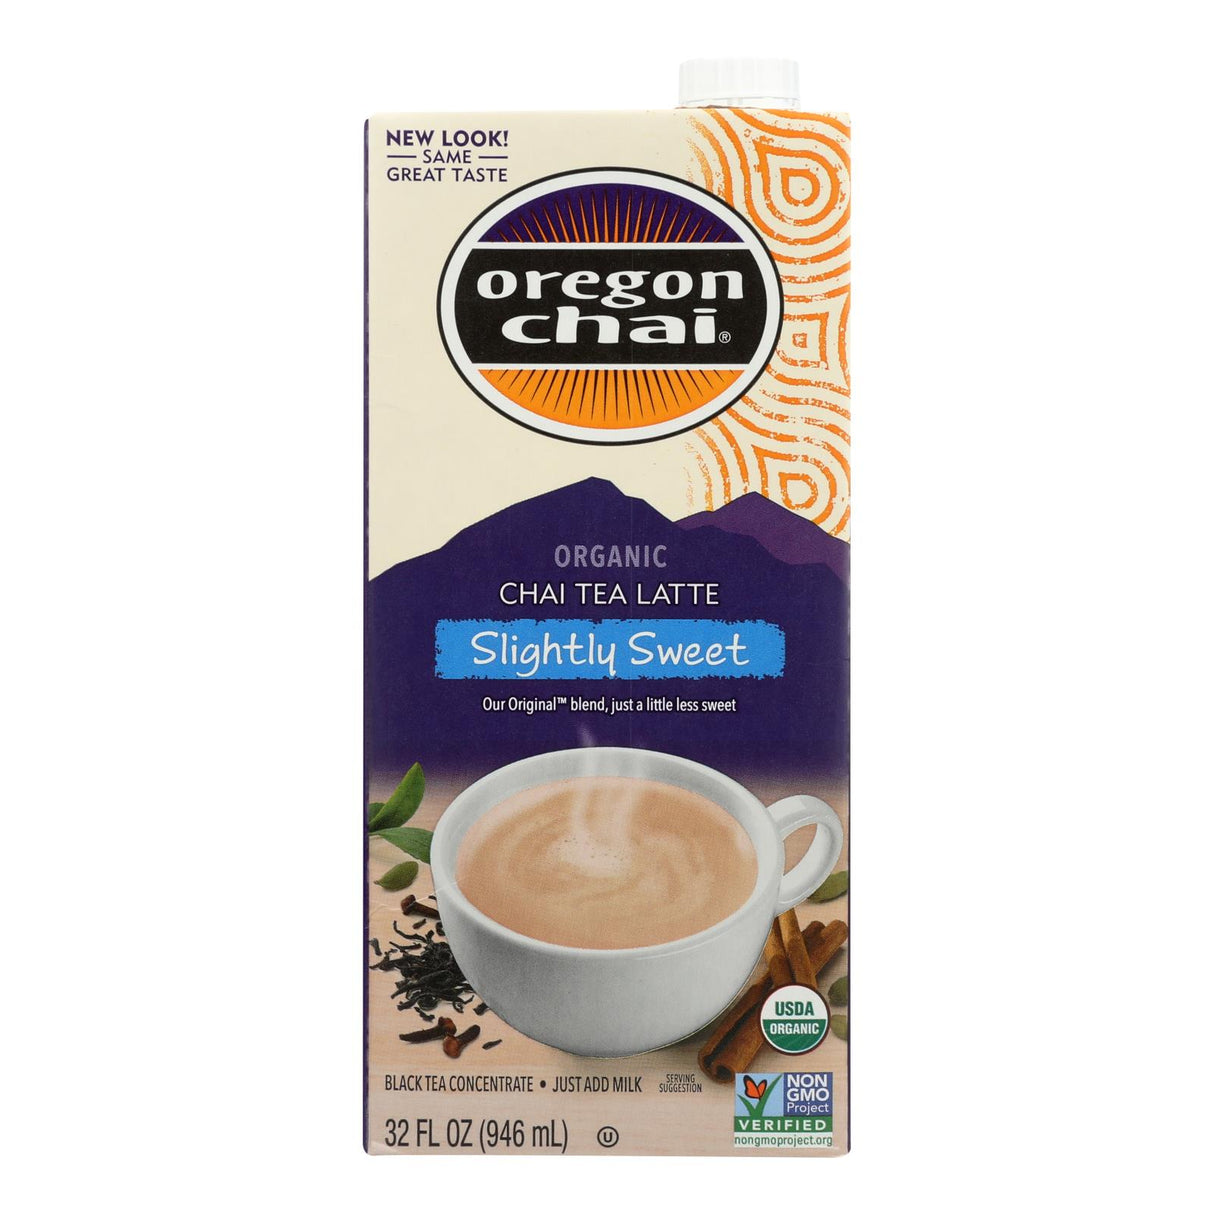 Oregon Chai Original Chai Tea Latte Concentrate - Slightly Sweet - Pack of 6 - 32 Fl Oz Each - Cozy Farm 